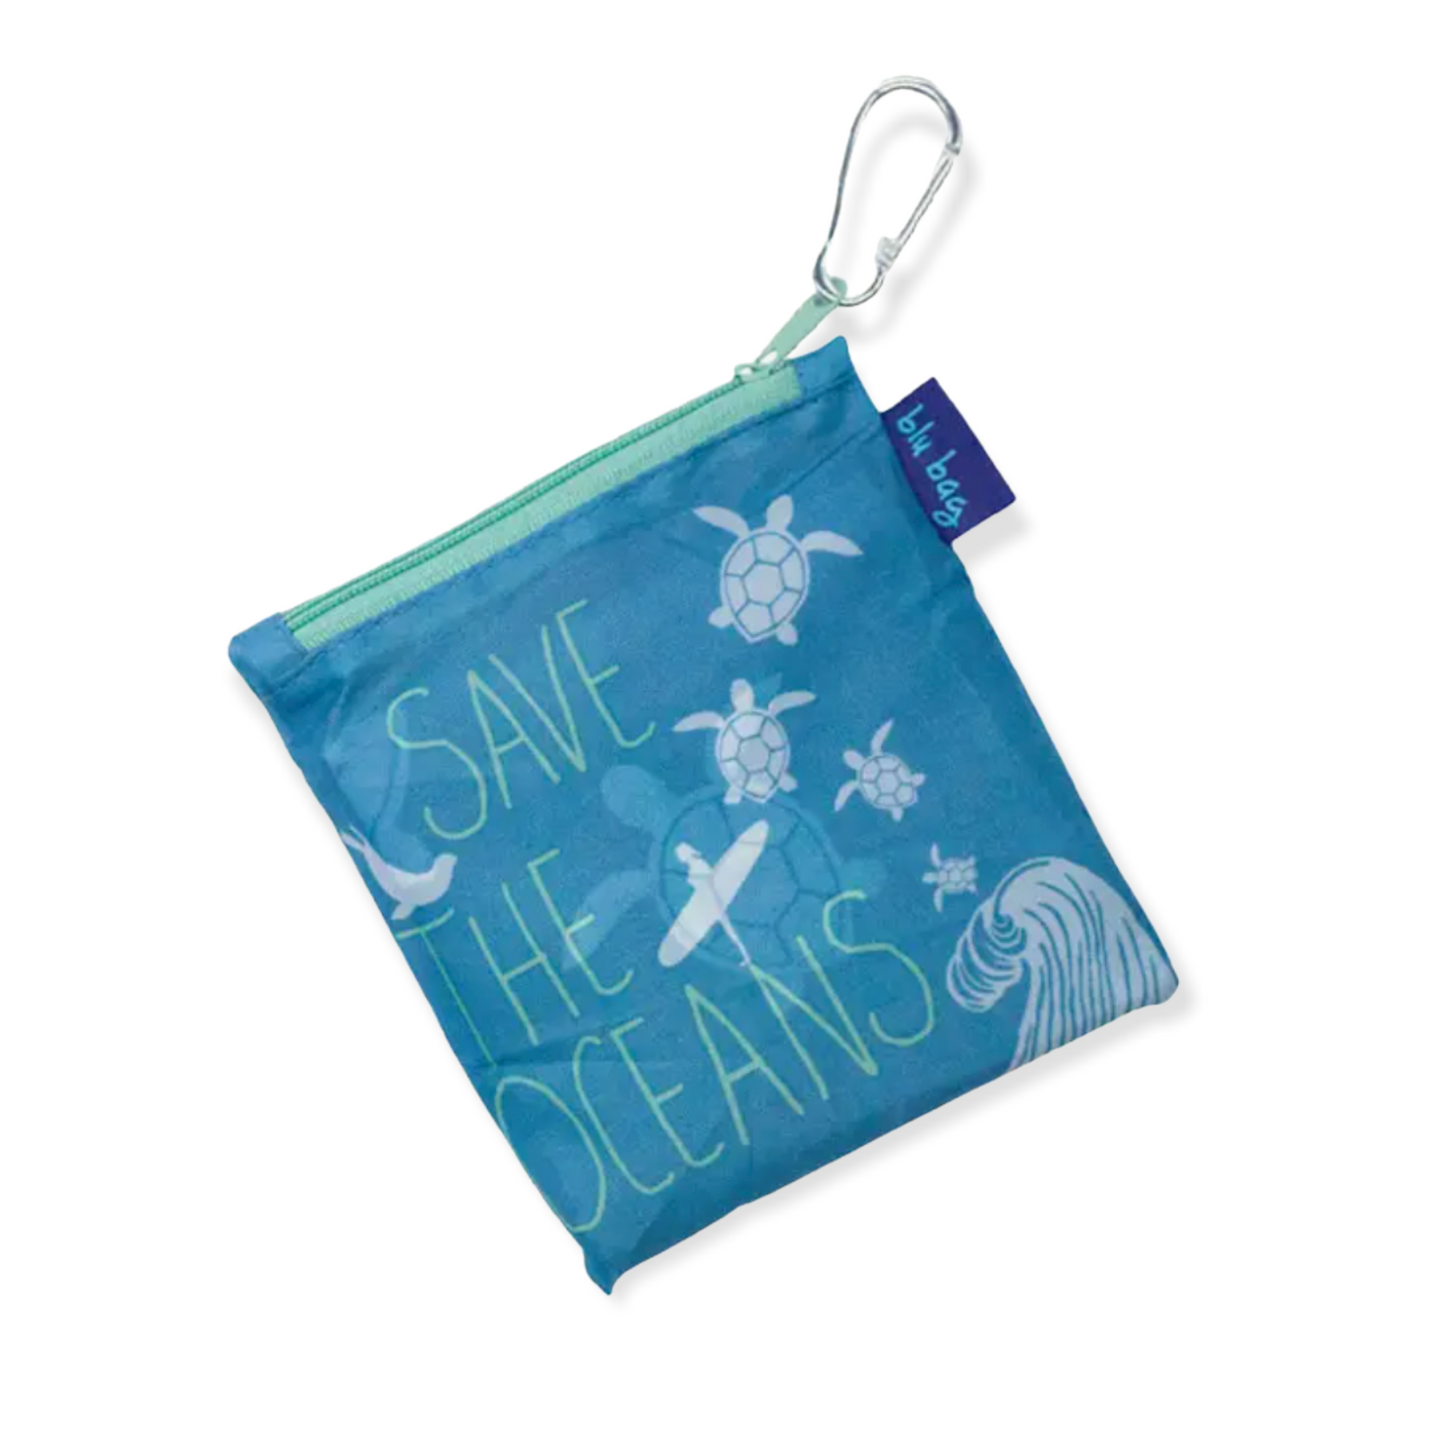 Totalizador | Compras reutilizables 'Blu Bag' de SAVE THE OCEANS